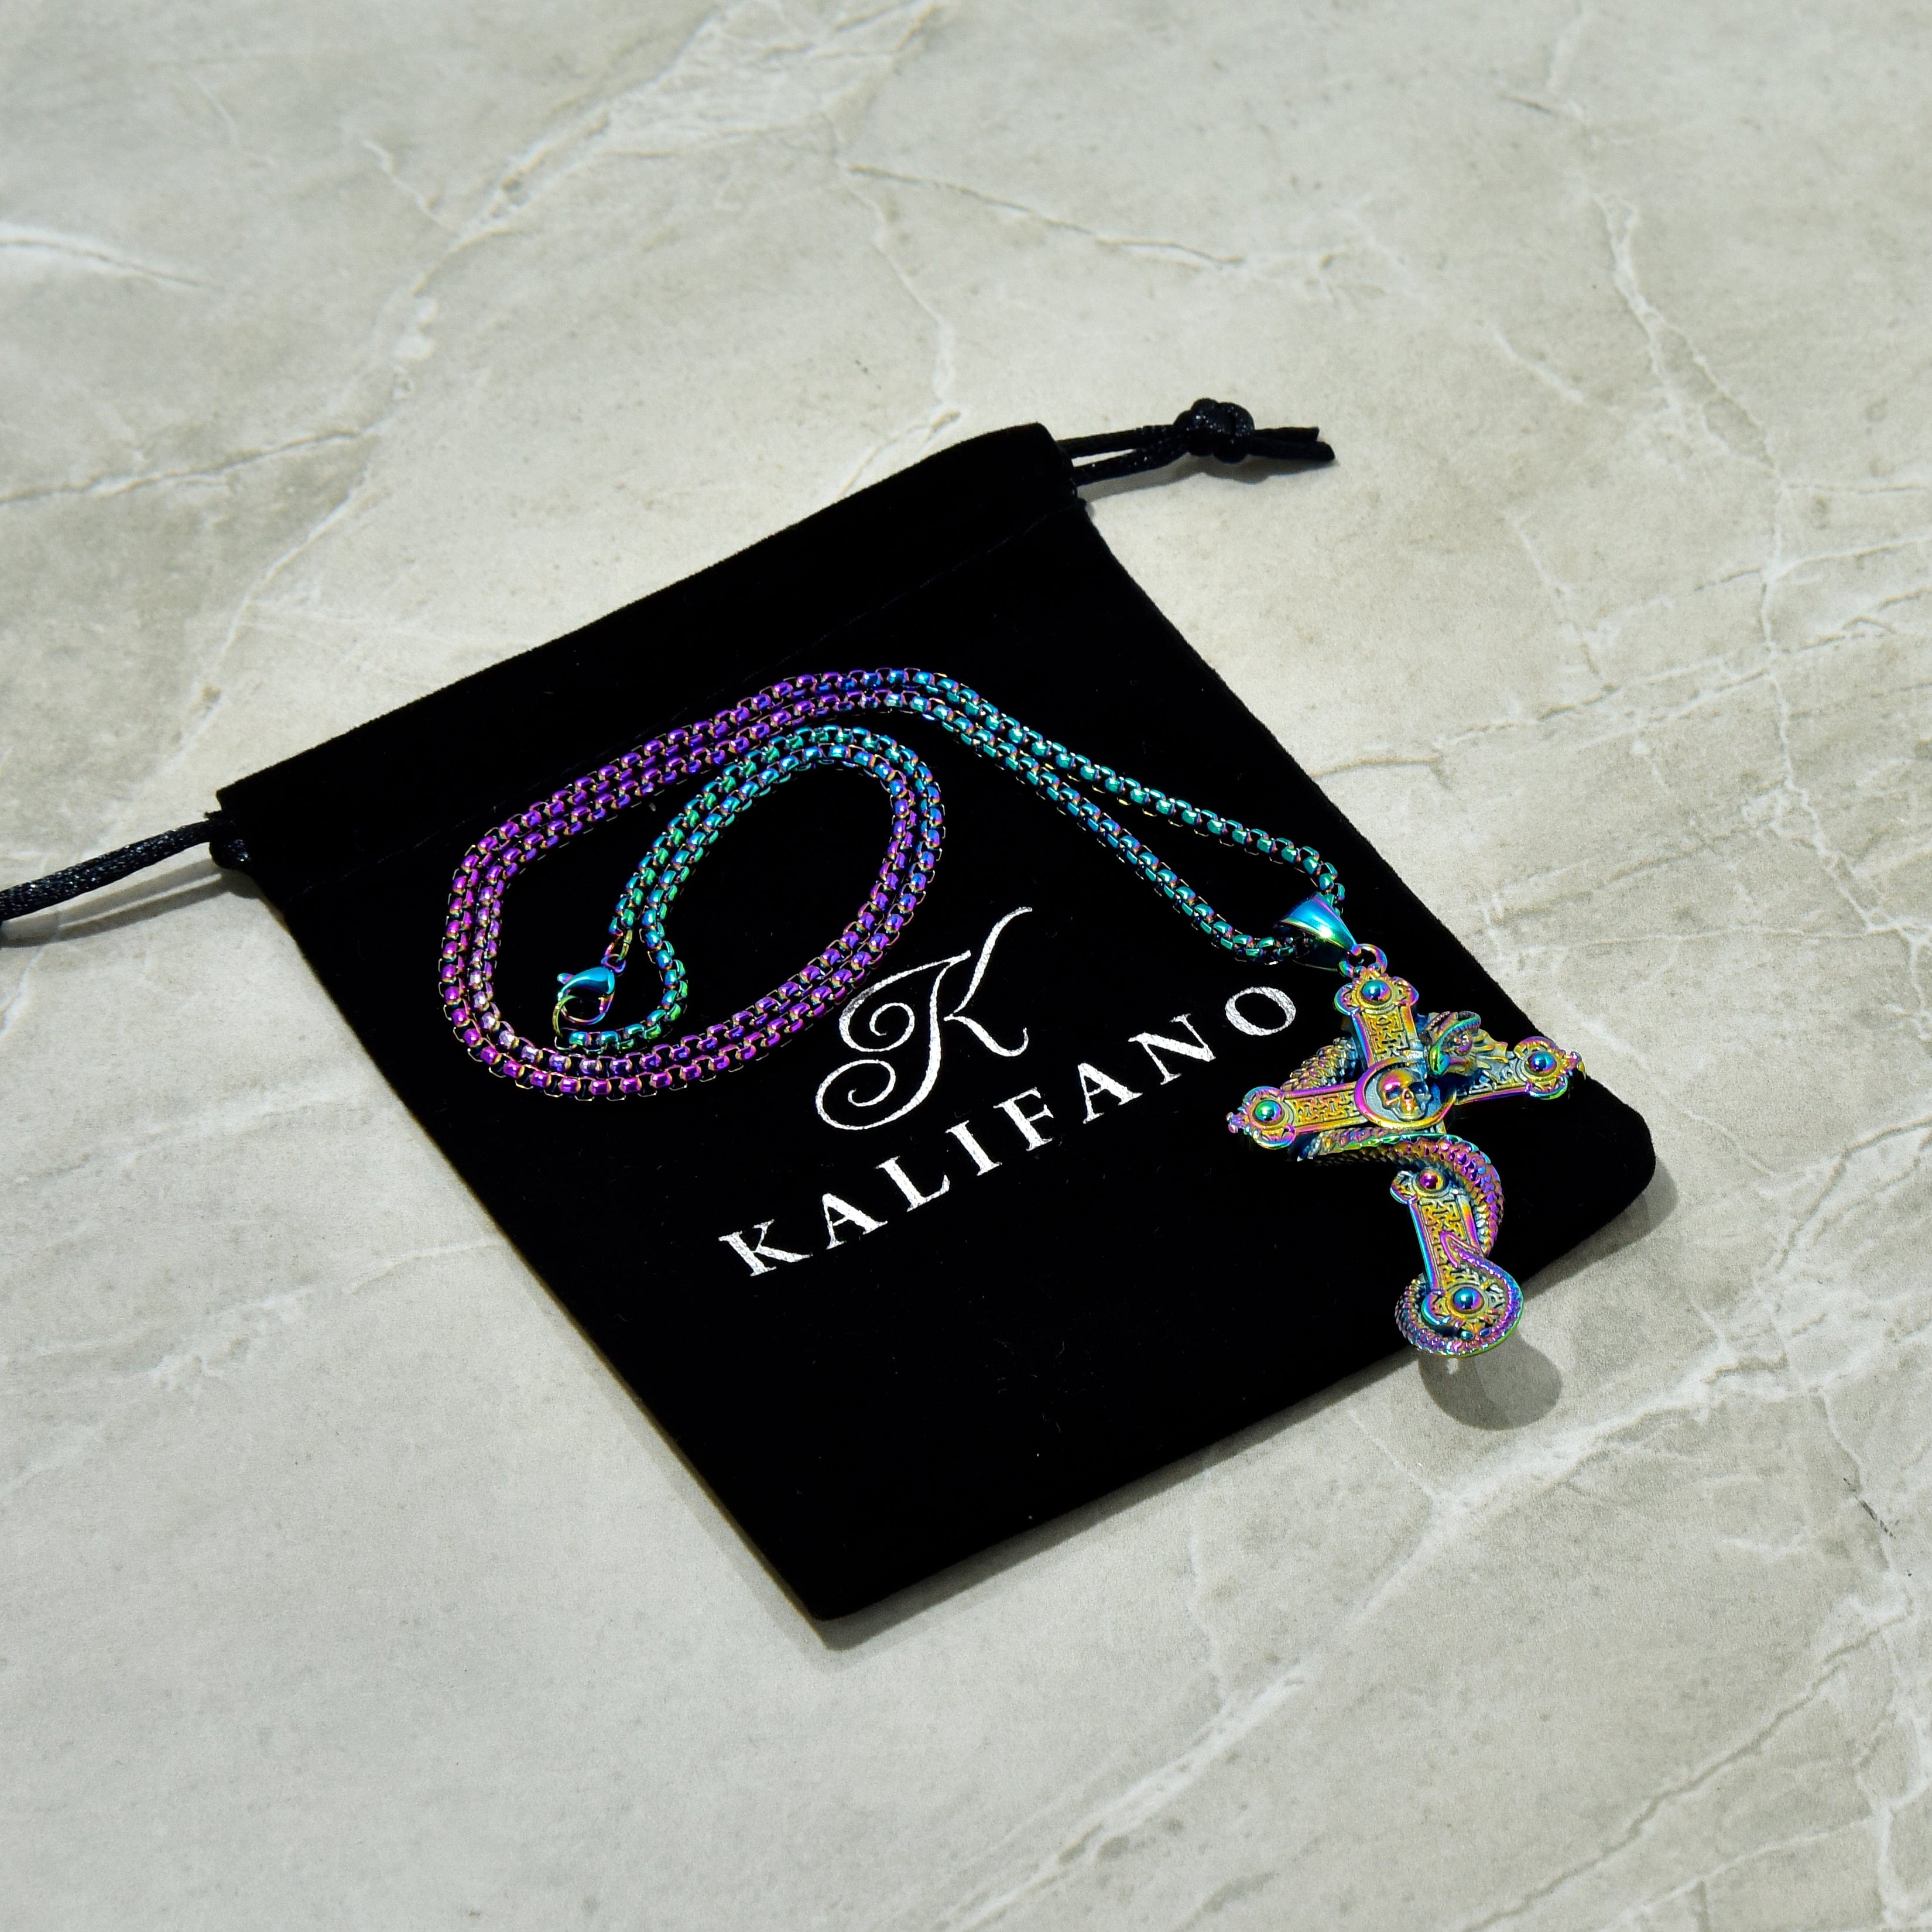 Kalifano Steel Hearts Jewelry Aurora Borealis Dragon Cross Steel Hearts Necklace SHN515-AB